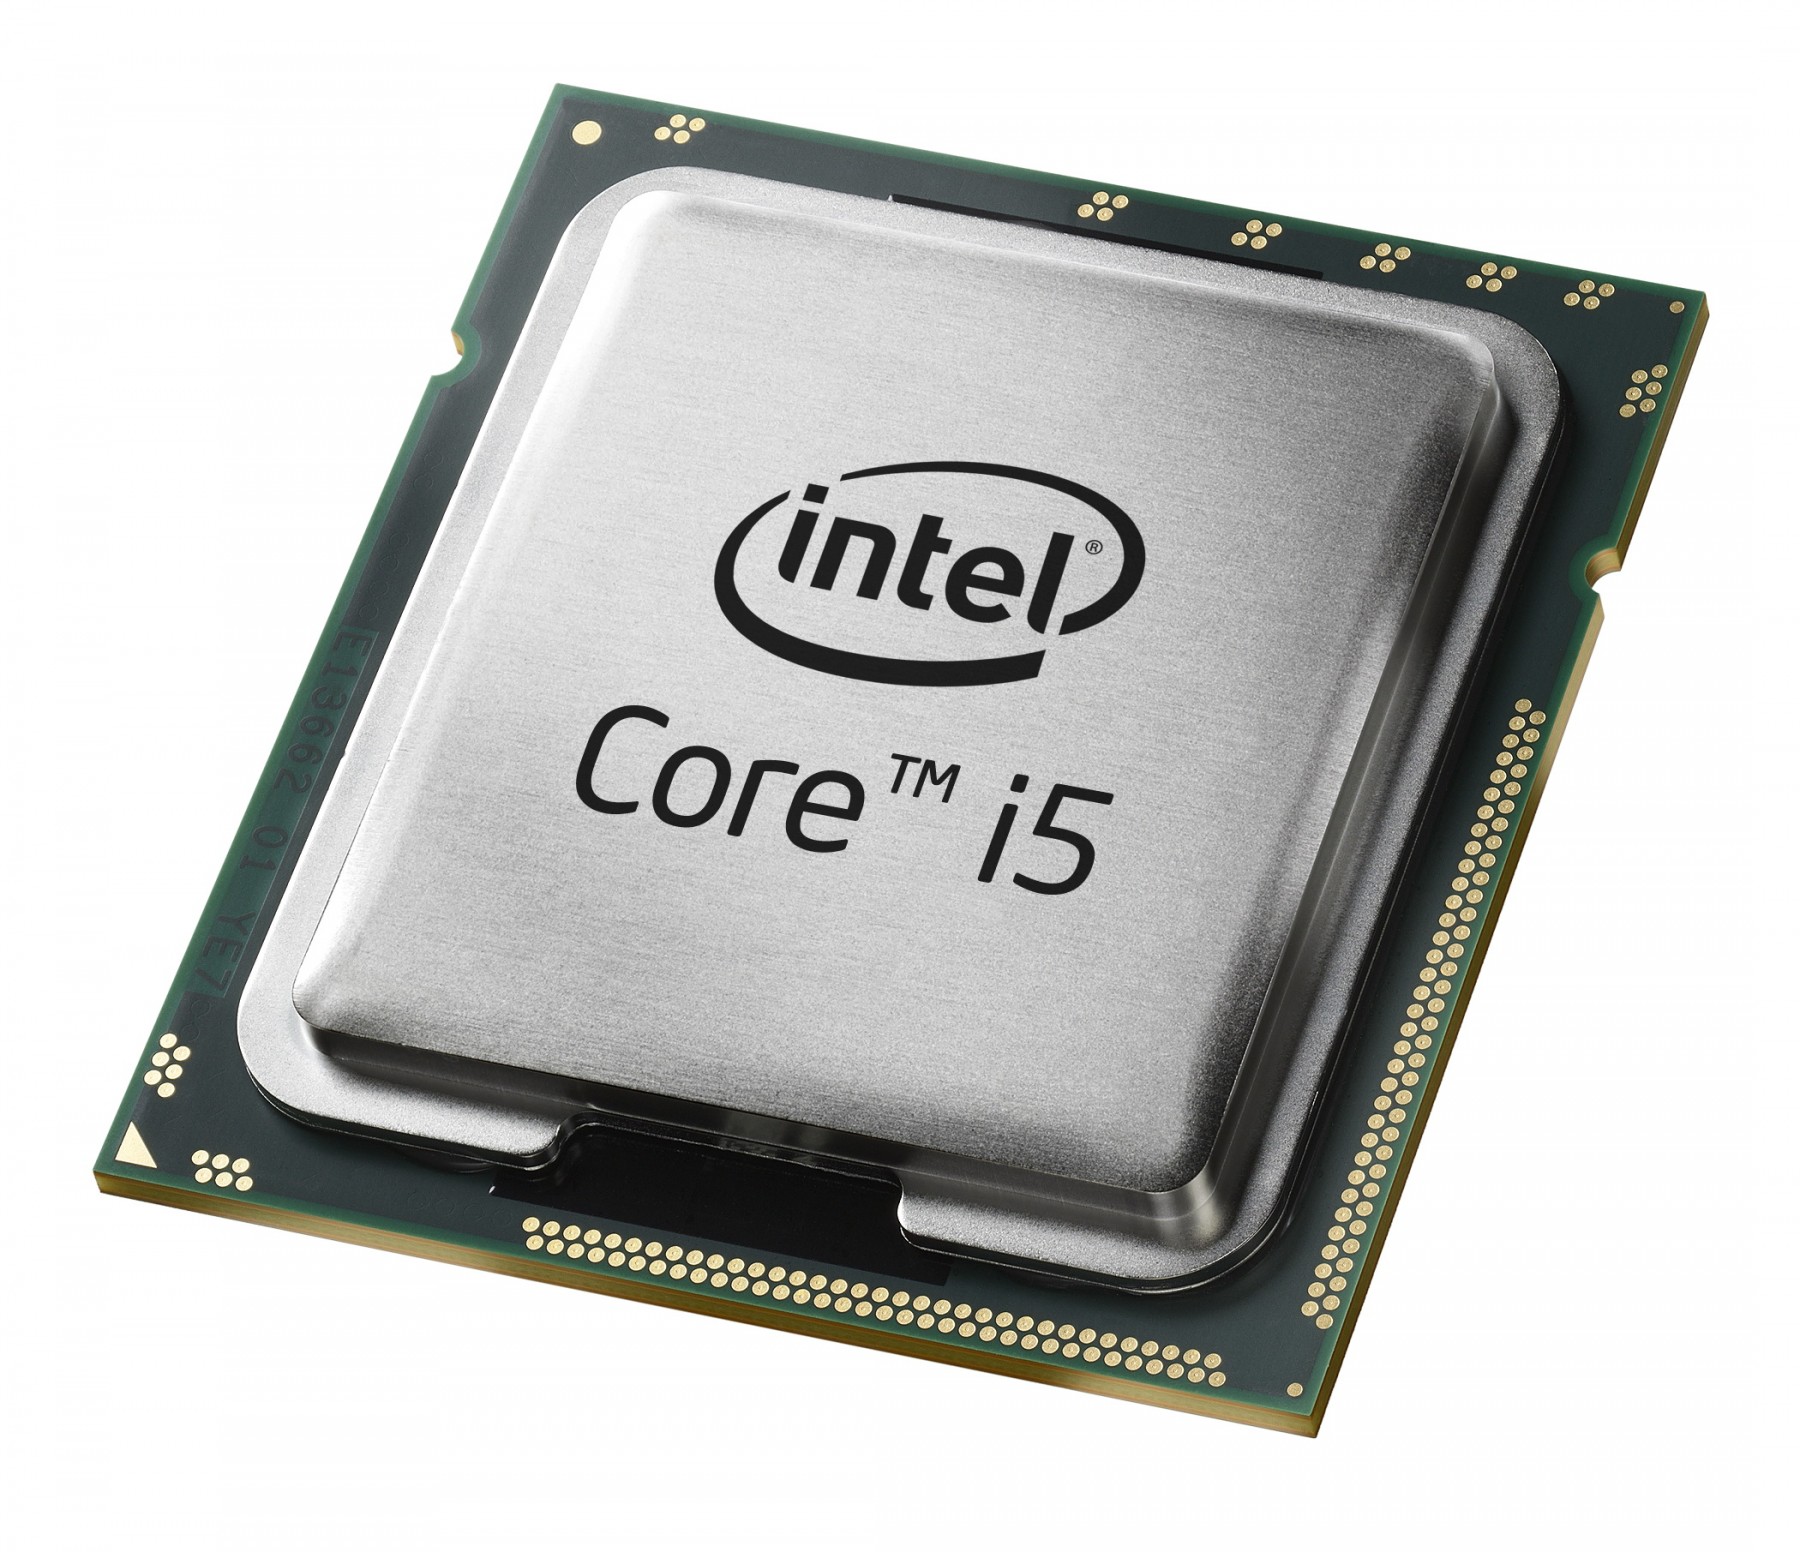 500030110-Intel Core i5-560M SLBTT 2.67Ghz 2.5GT/s BGA 1288 Processor-image